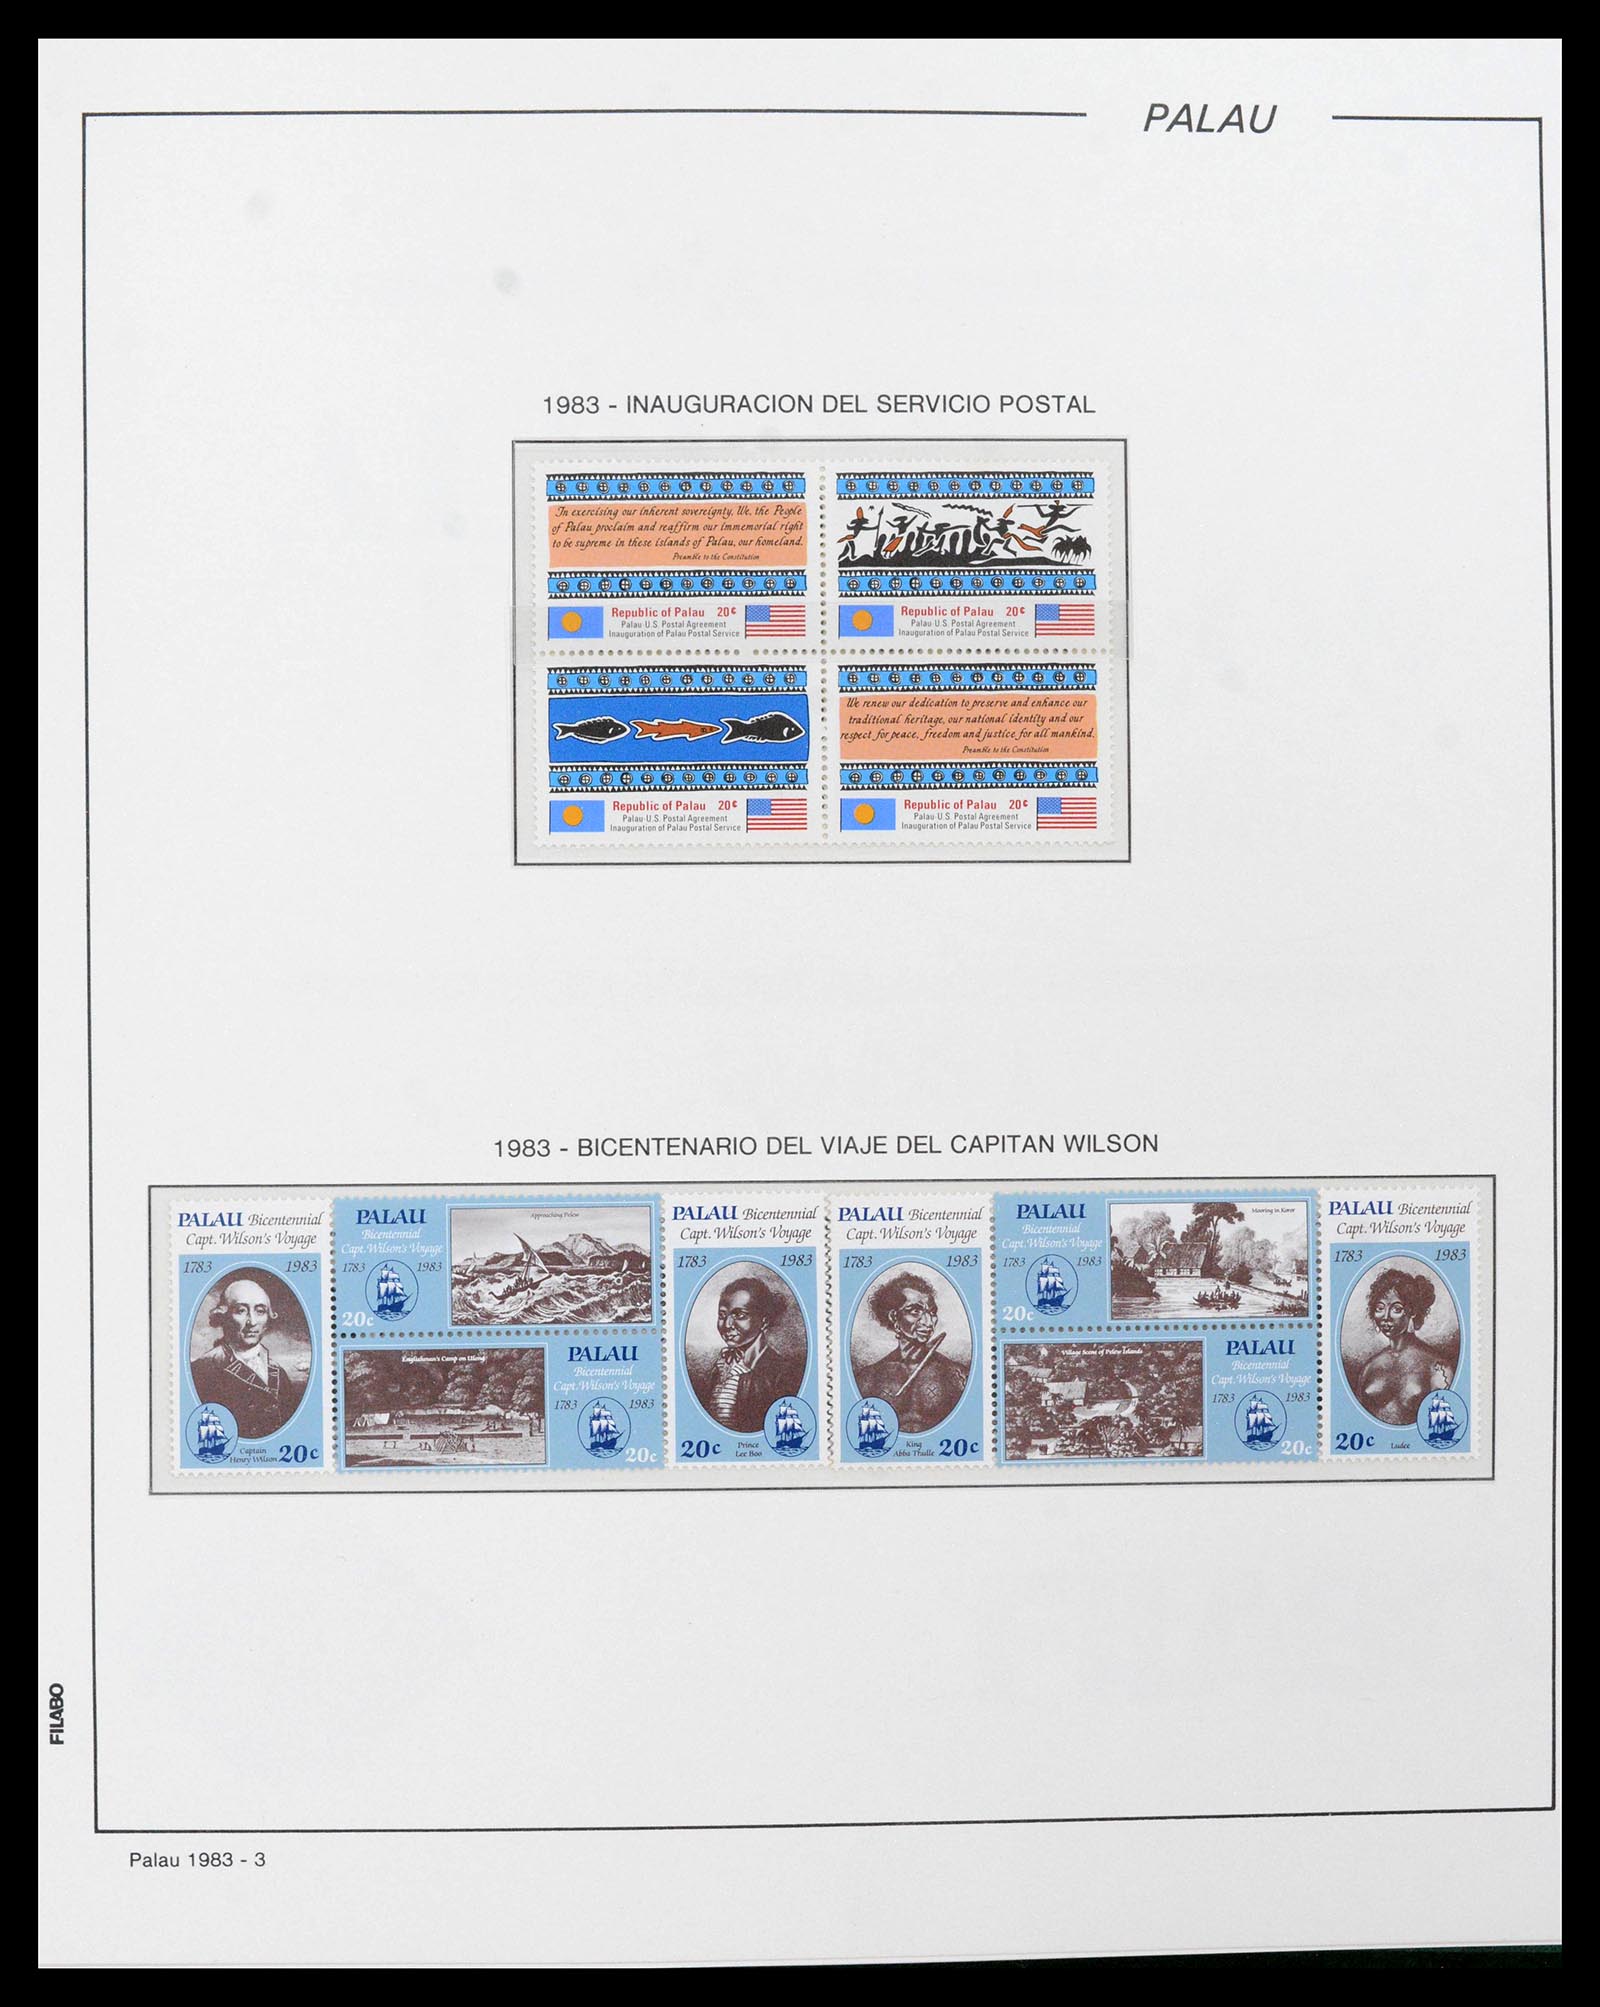 39222 0002 - Stamp collection 39222 Palau, Micronesia and Marshall islands 1980-1995.